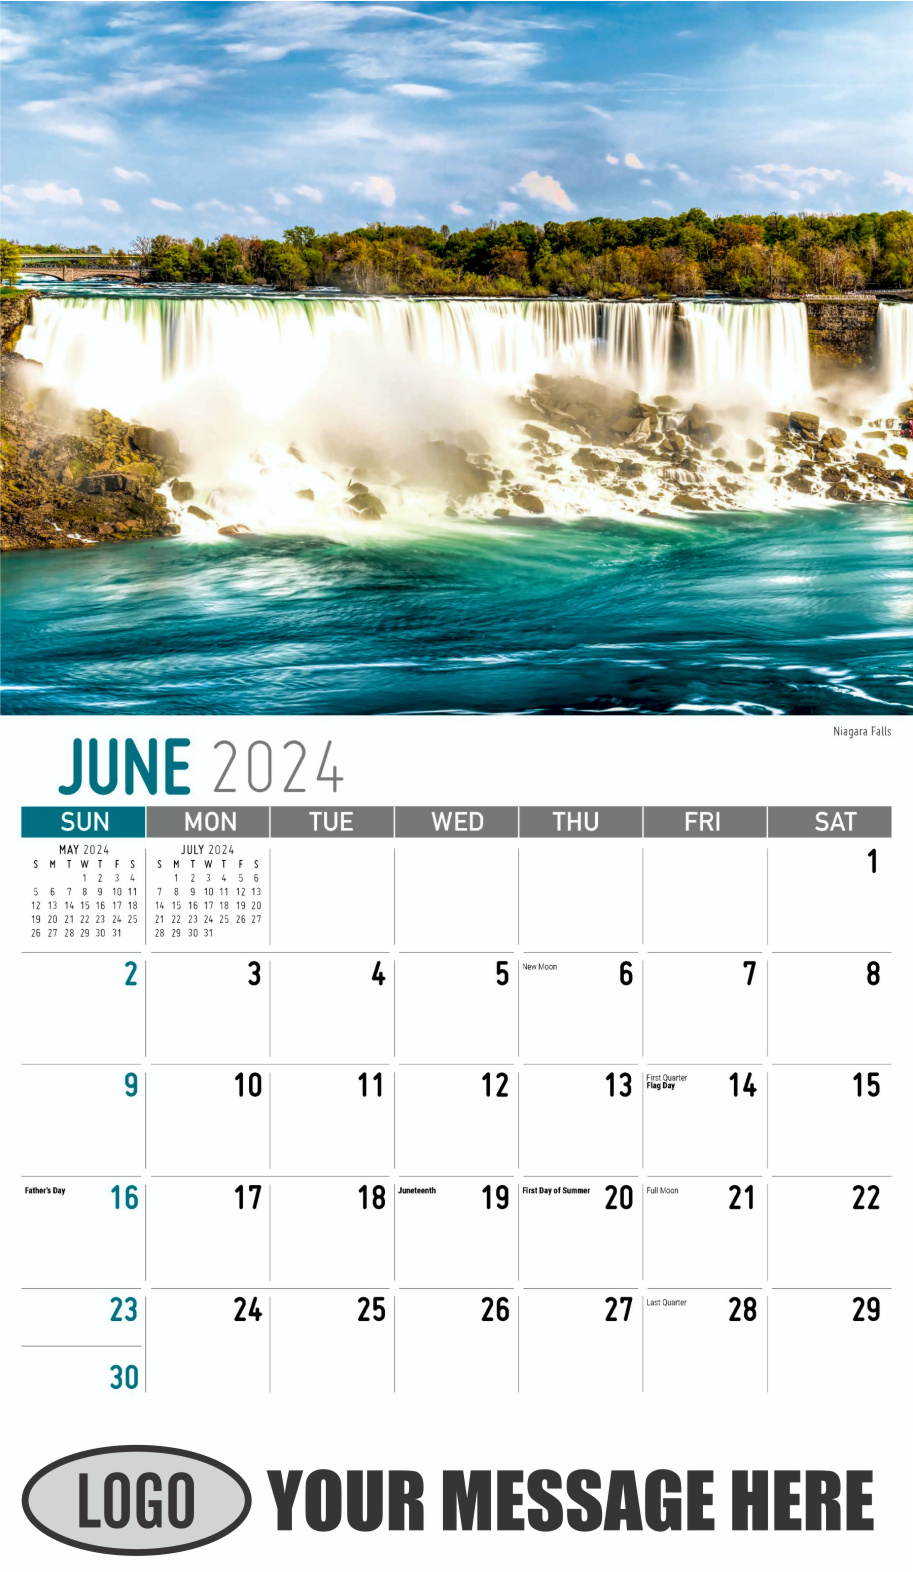 Scenes of New York 2024 Business Promotional Wall Calendar - June